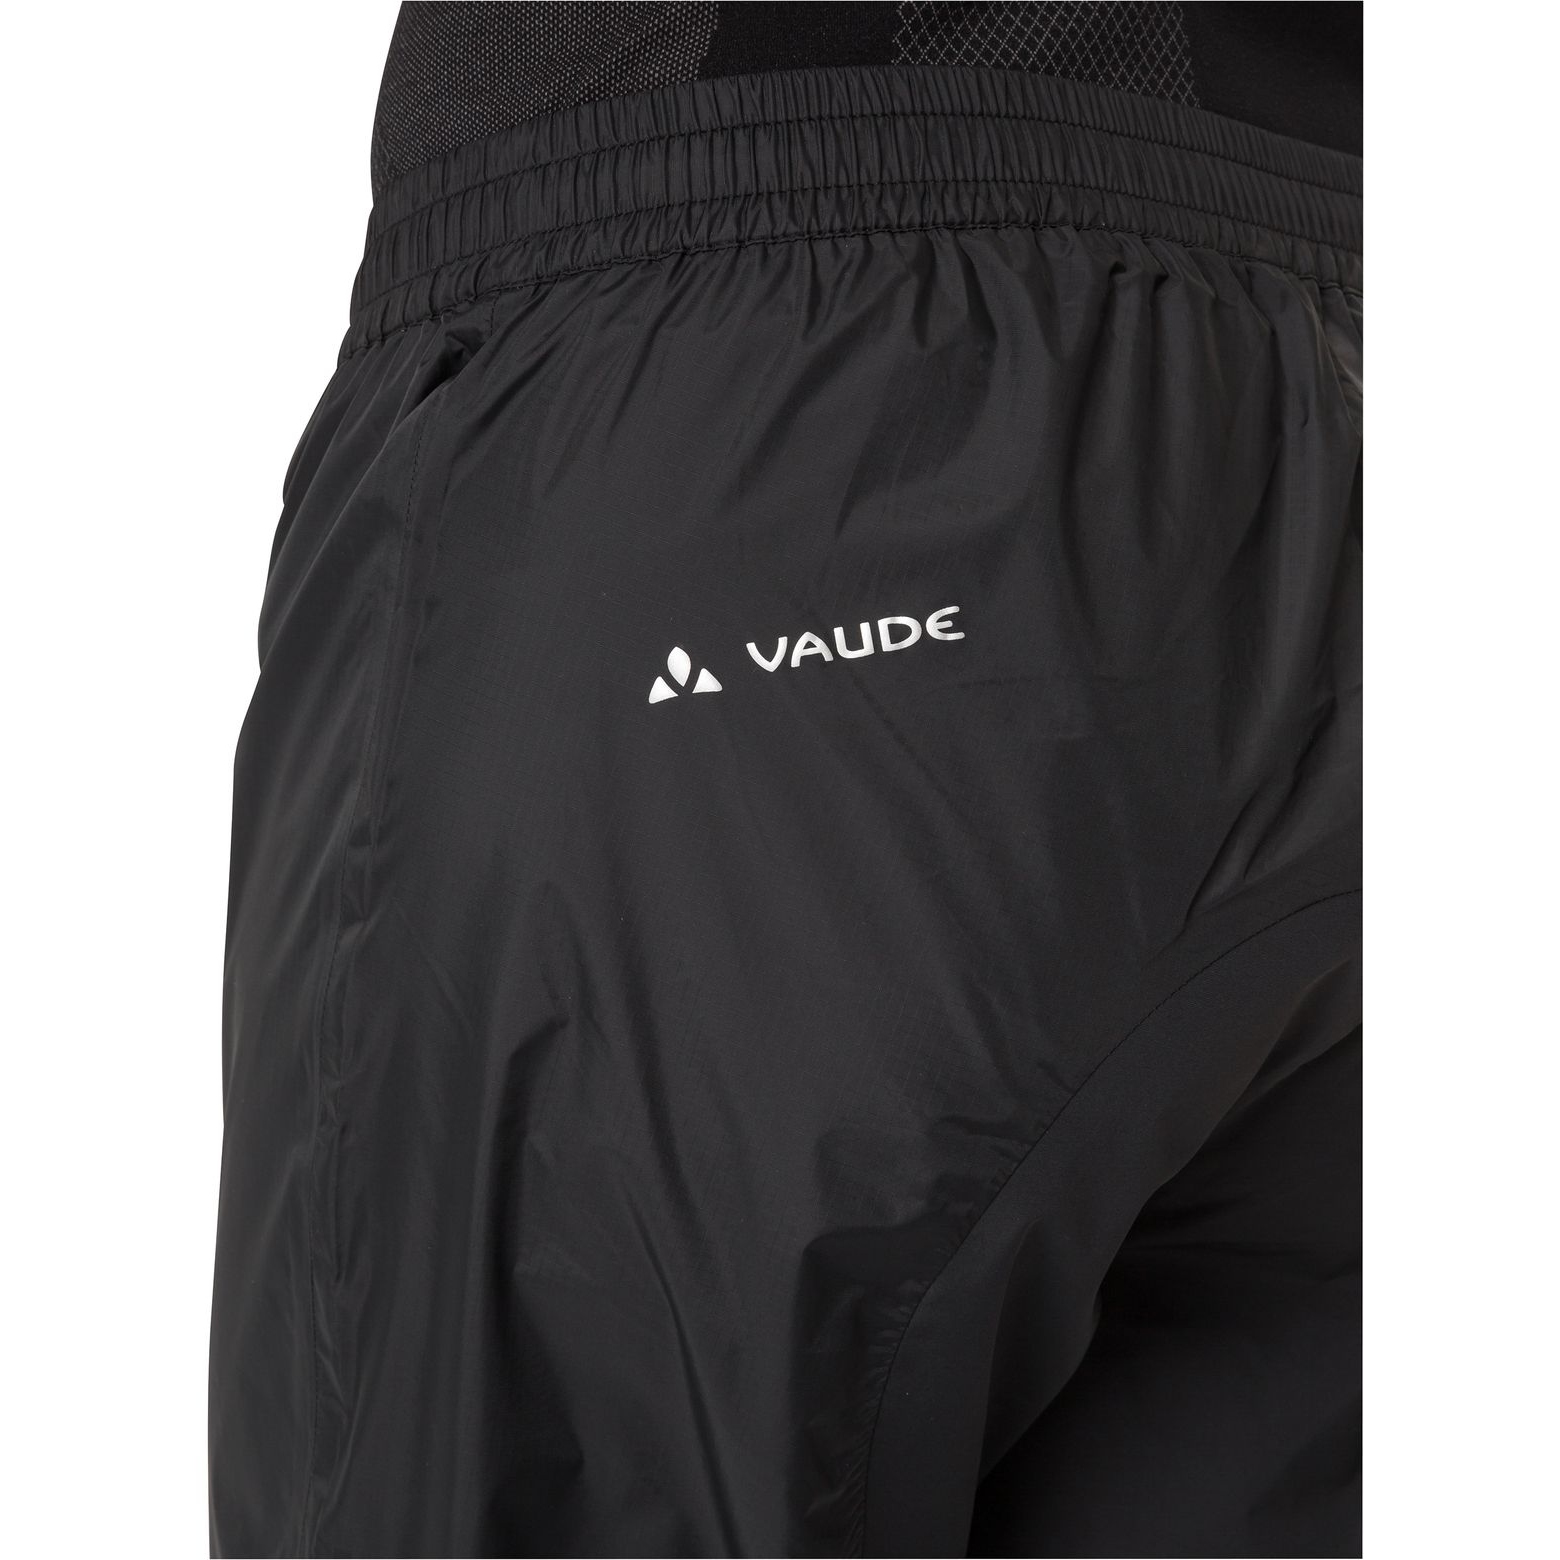 Vaude Drop Pants II Men - Long - black uni | BIKE24